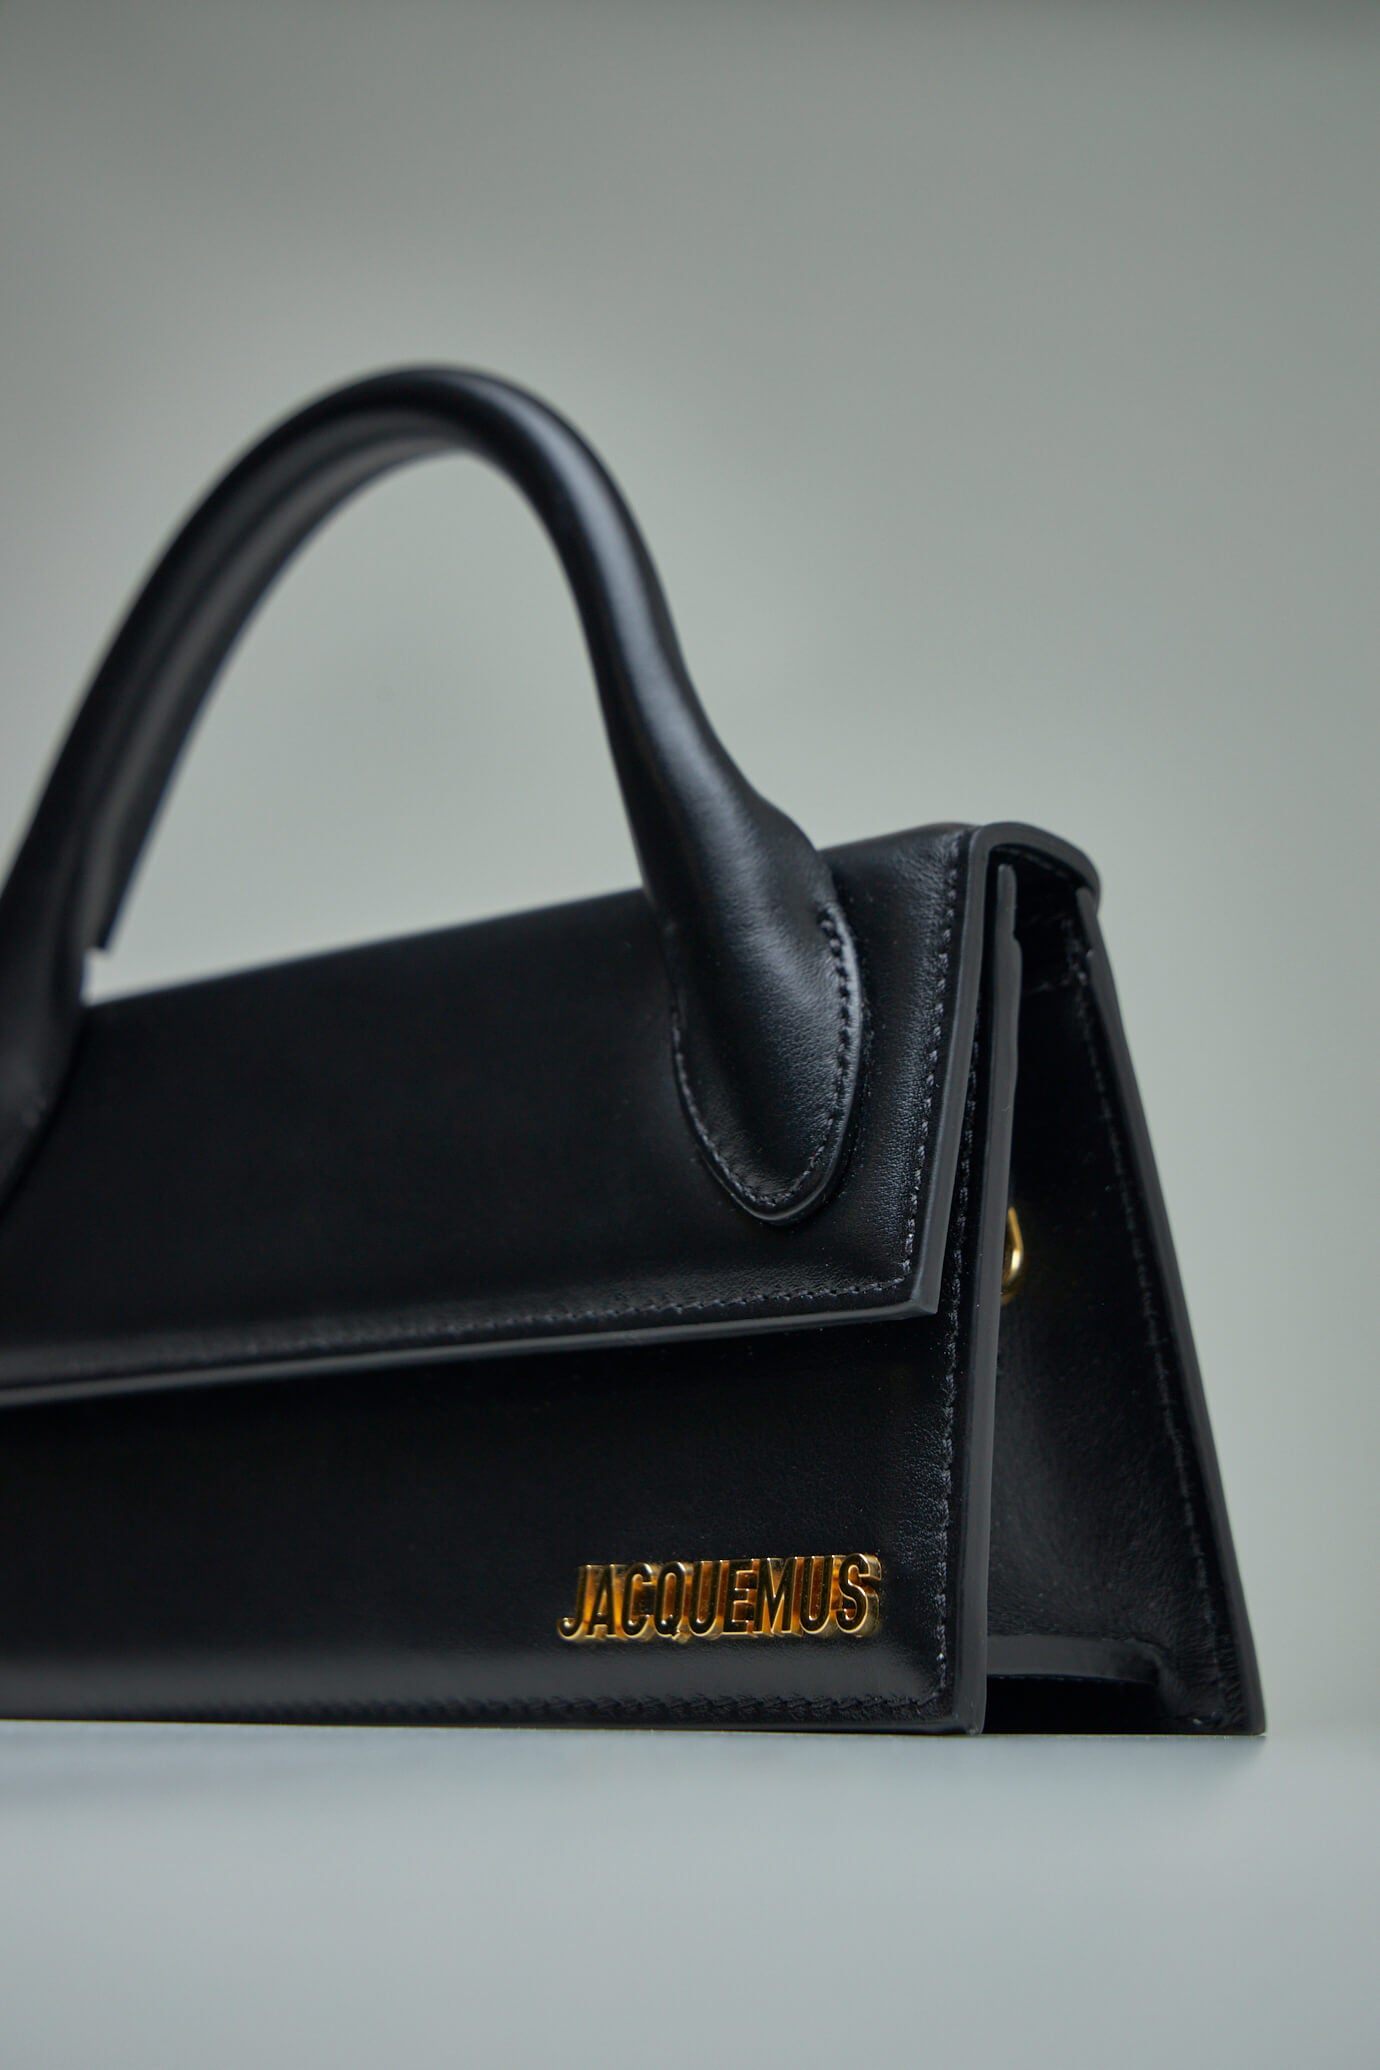 Jacquemus - Black Le Chiquito Long Bag